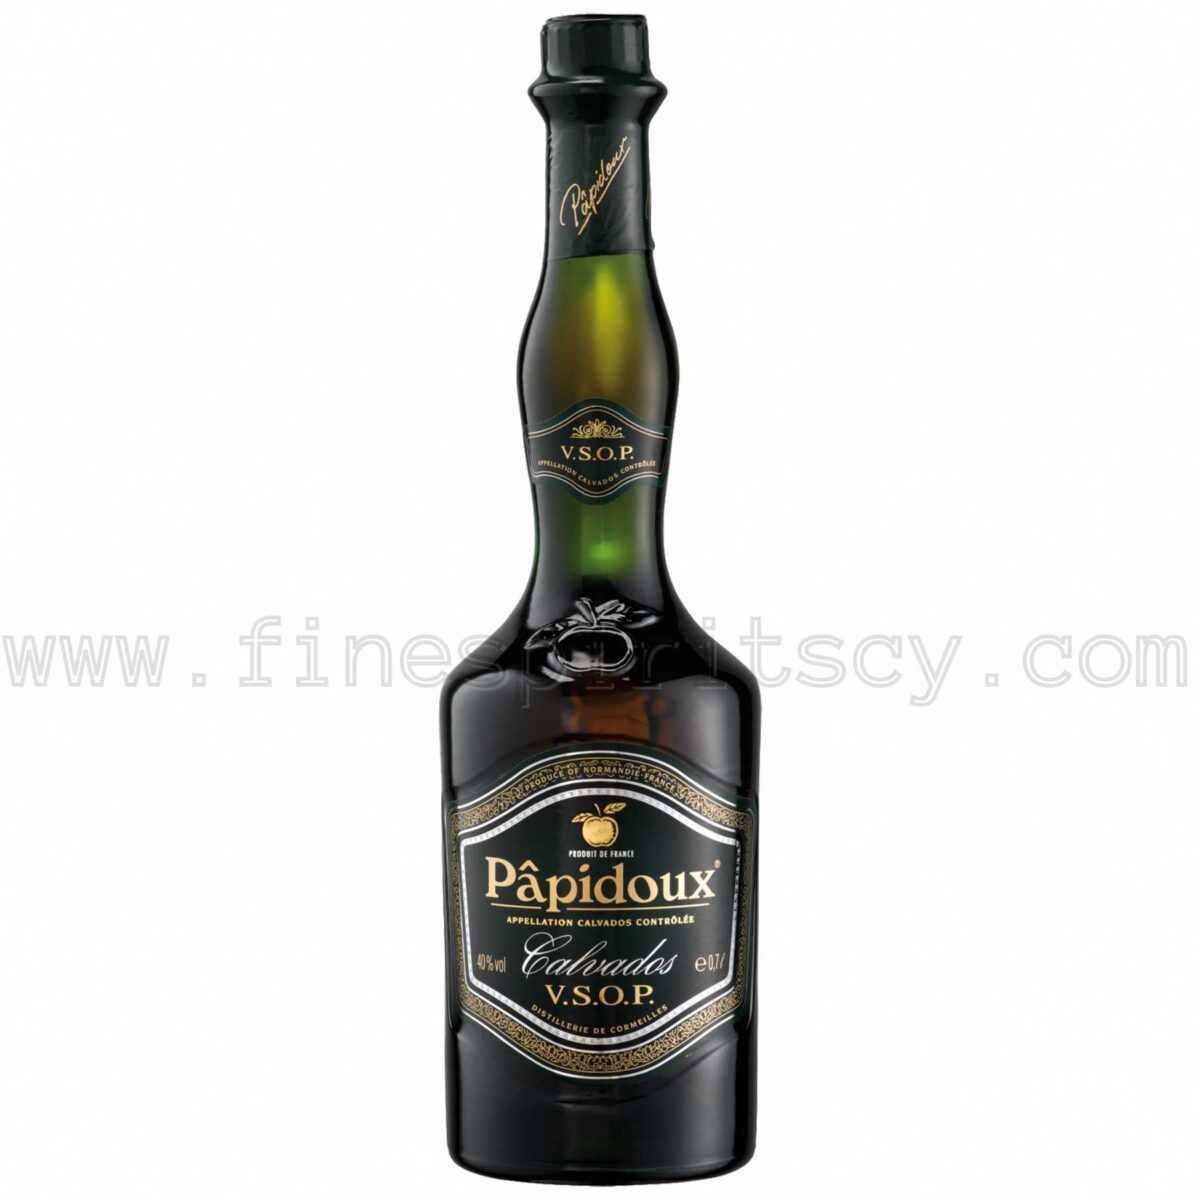 Papidoux Calvados VSOP French Cognac Brandy France Cyprus Price